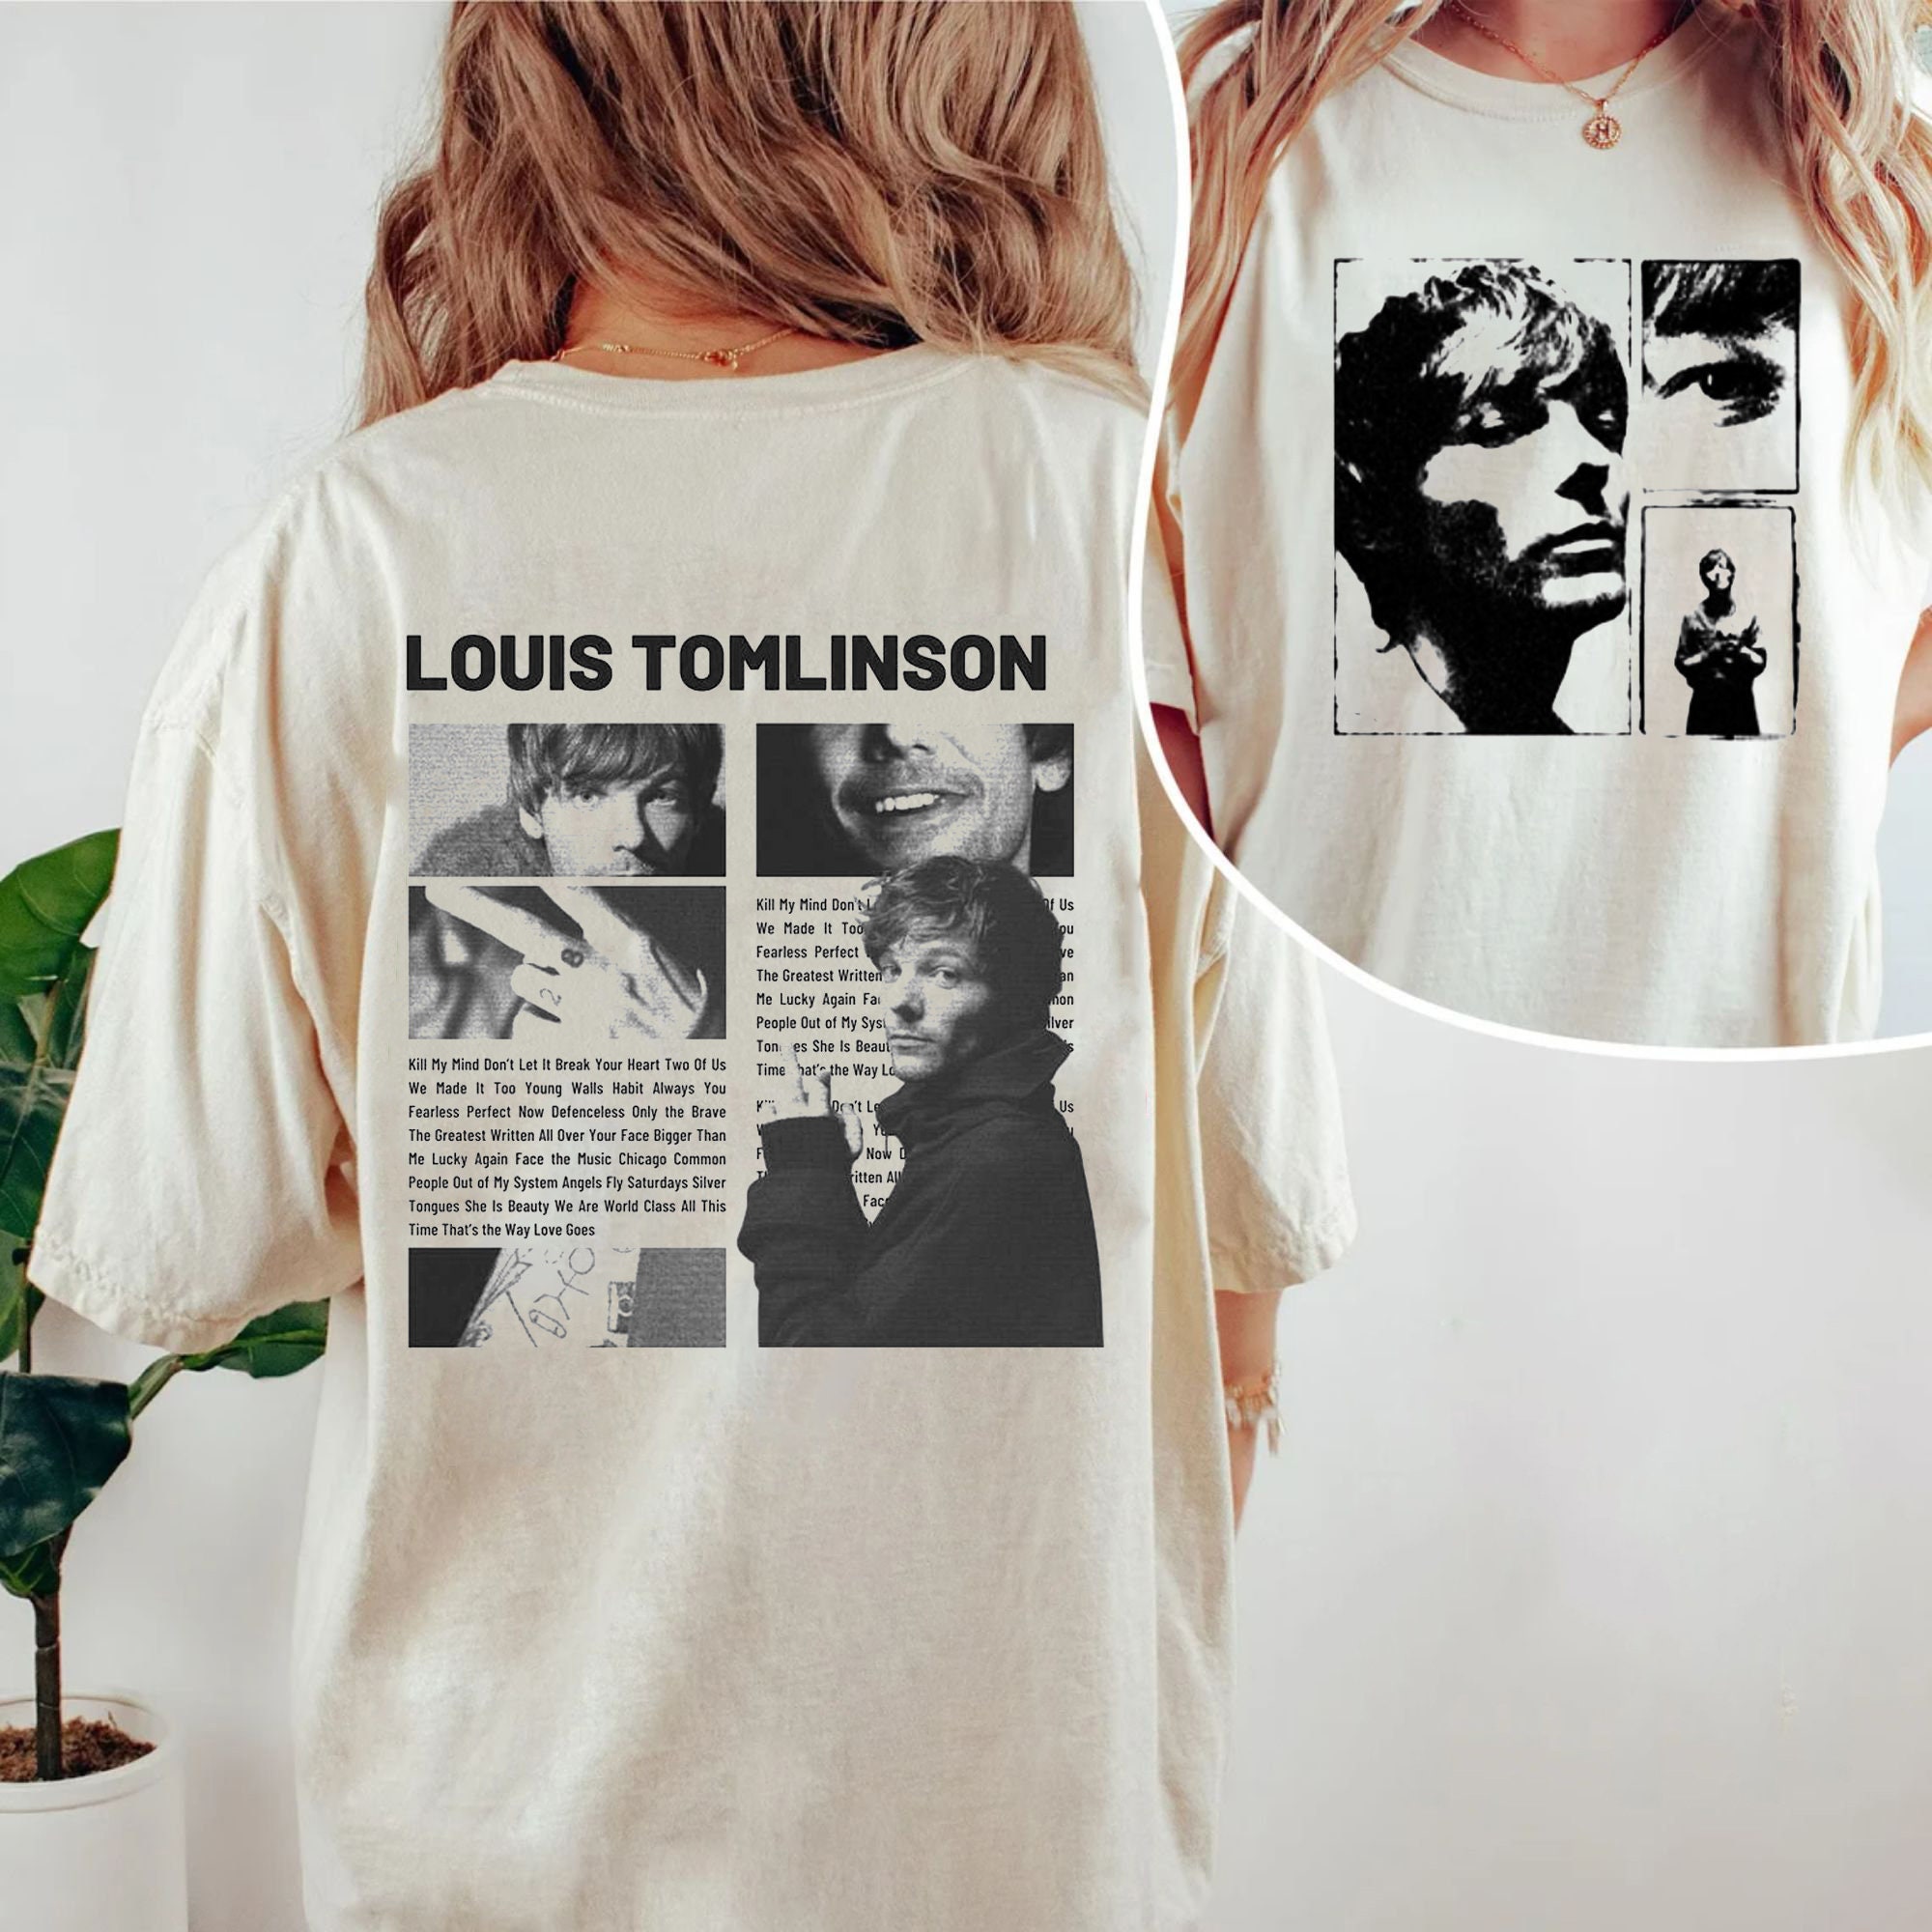 Louis Tomlinson Kill My Mind Long Sleeve Shirt